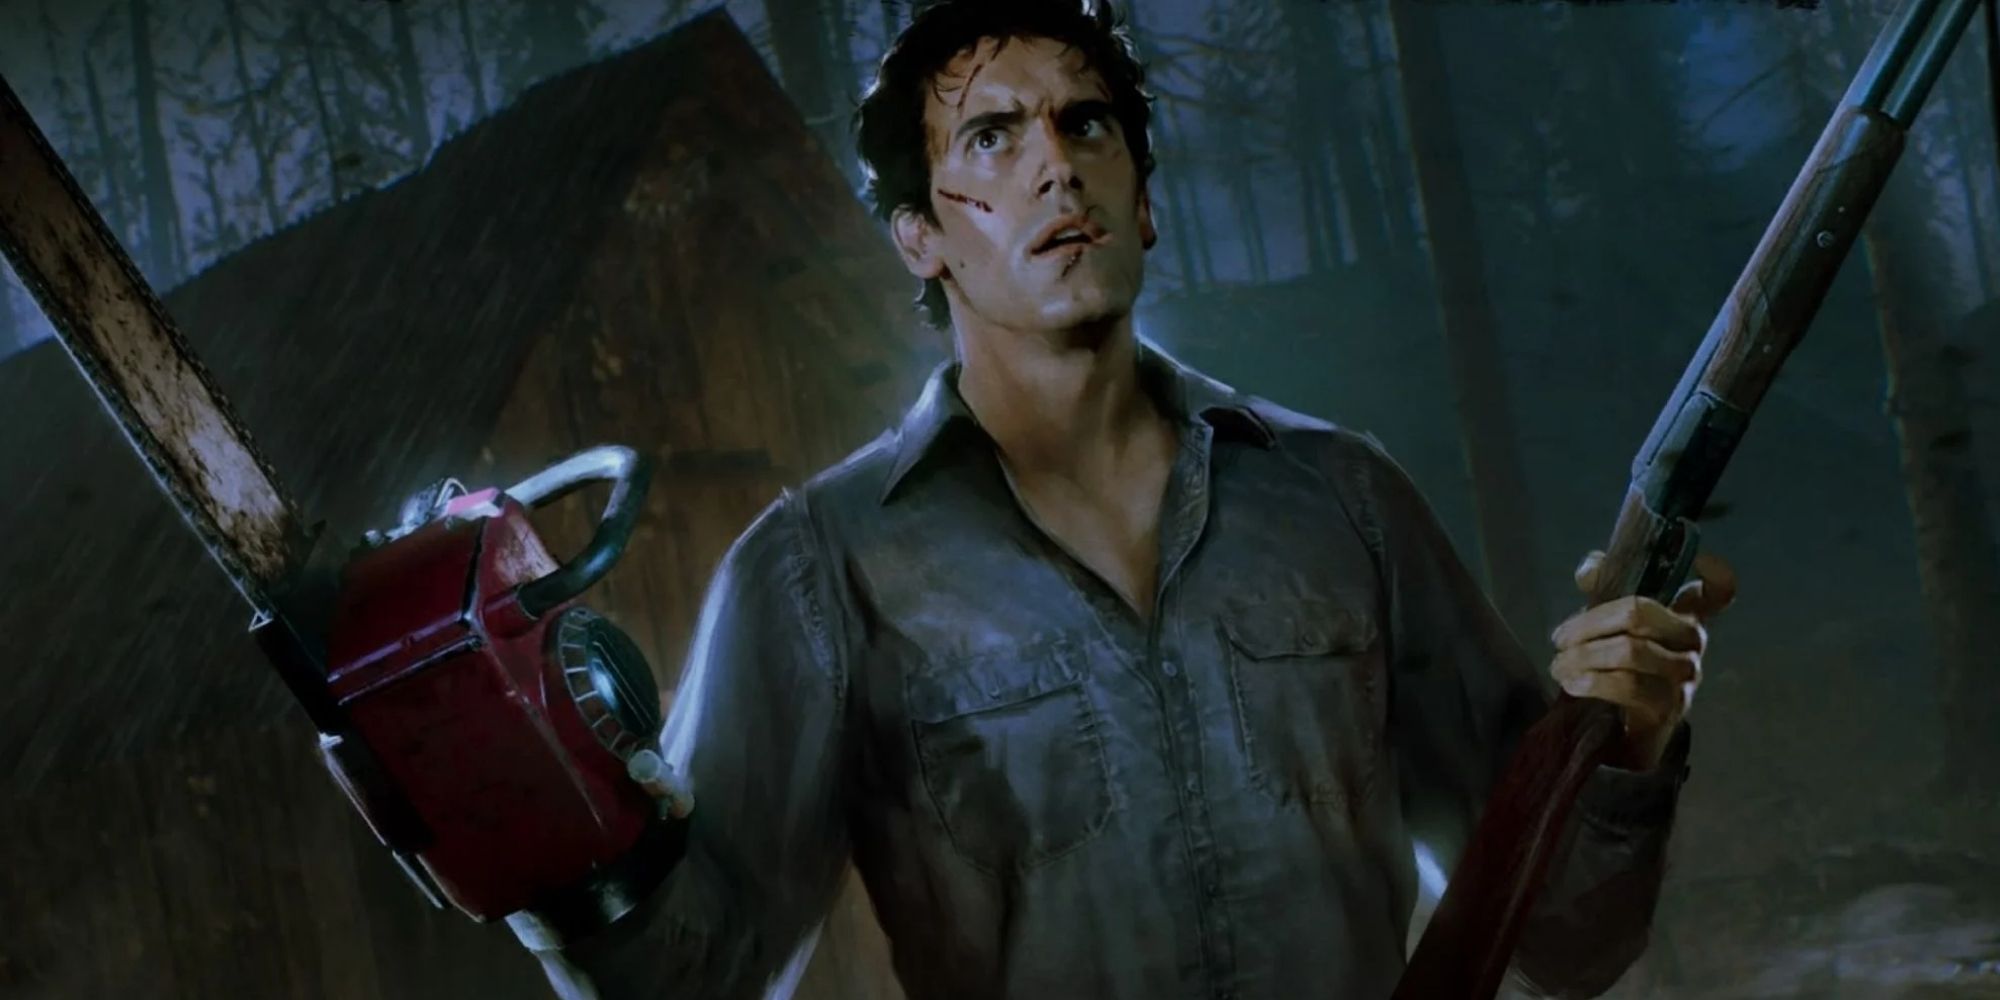 Evil Dead: The Game' trailer shows a brutal multiplayer battle with Deadites